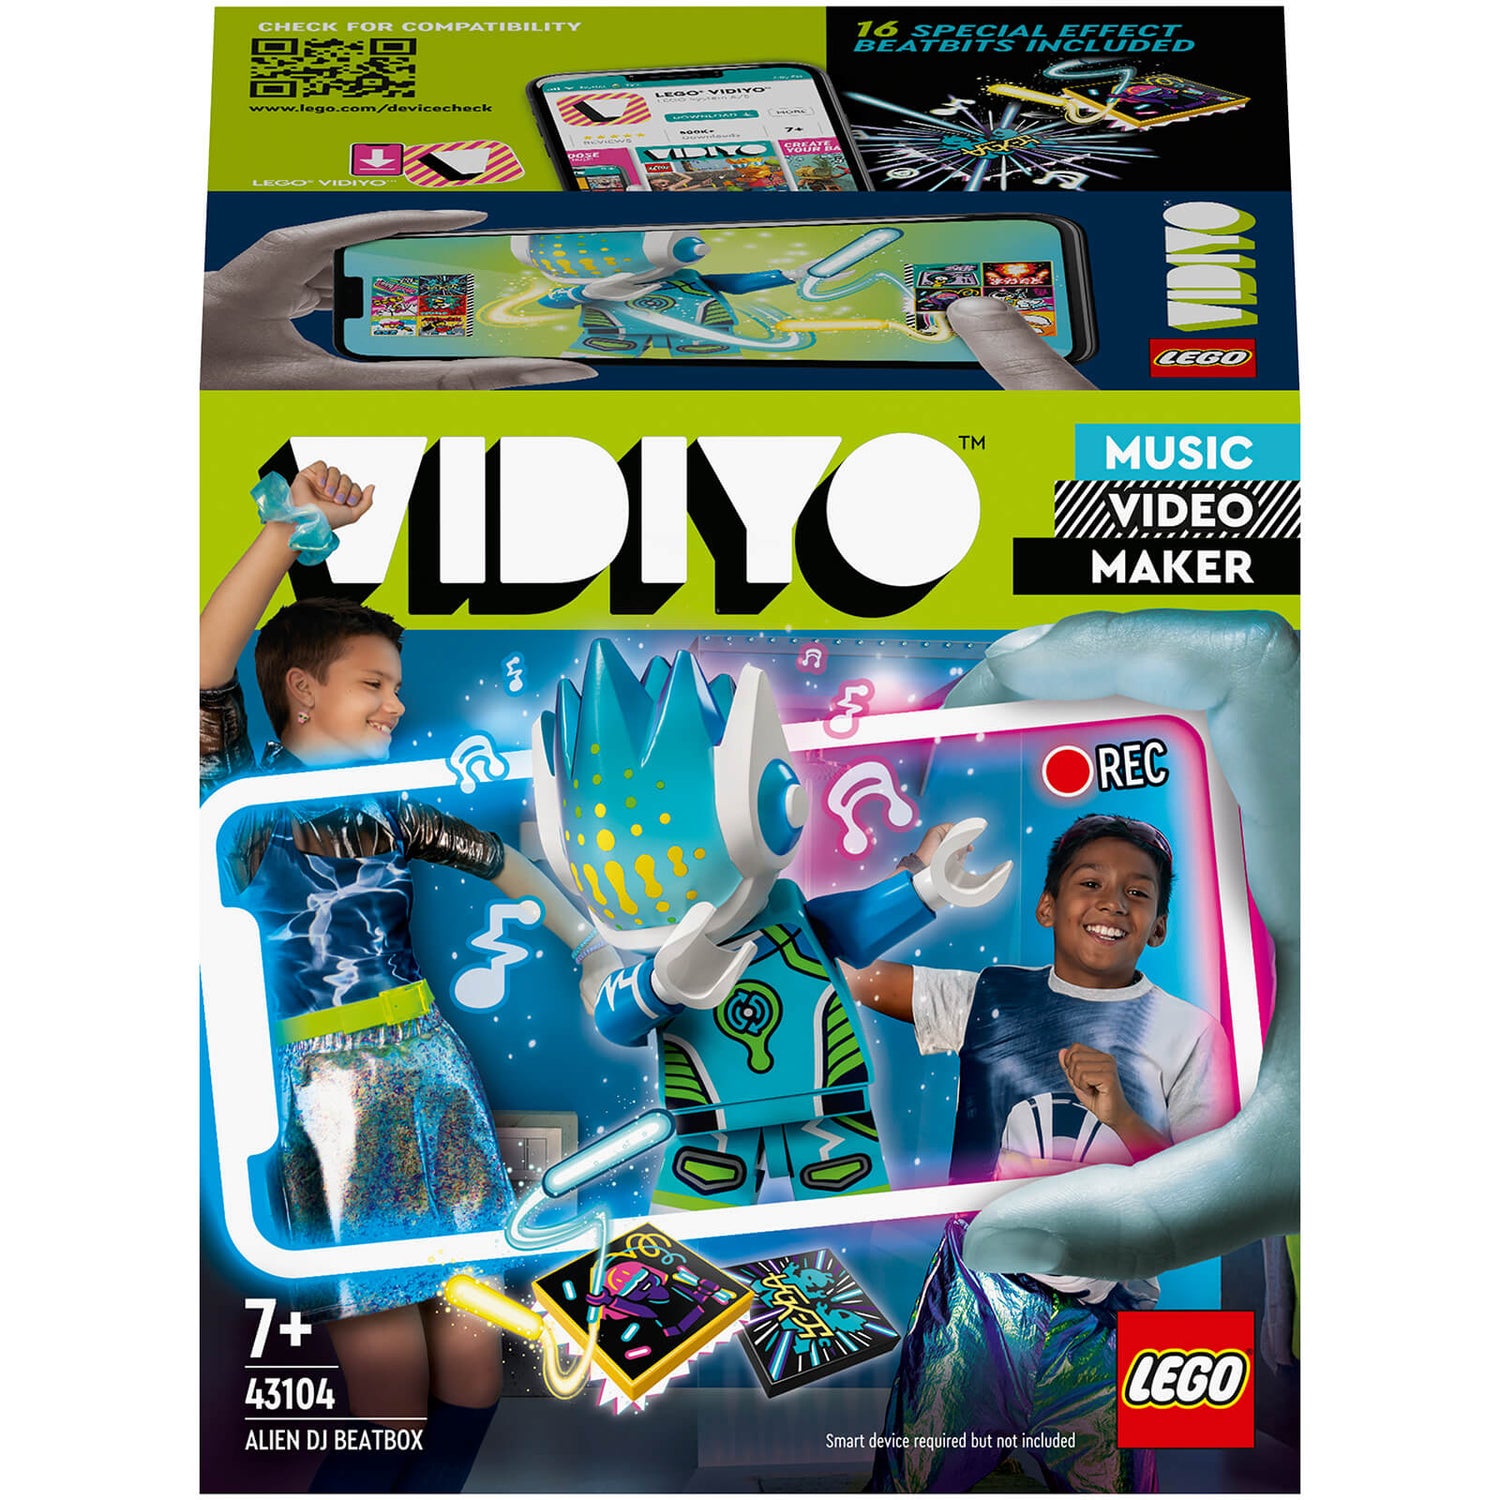 LEGO VIDIYO Alien DJ BeatBox Music Video Maker Toy (43104)